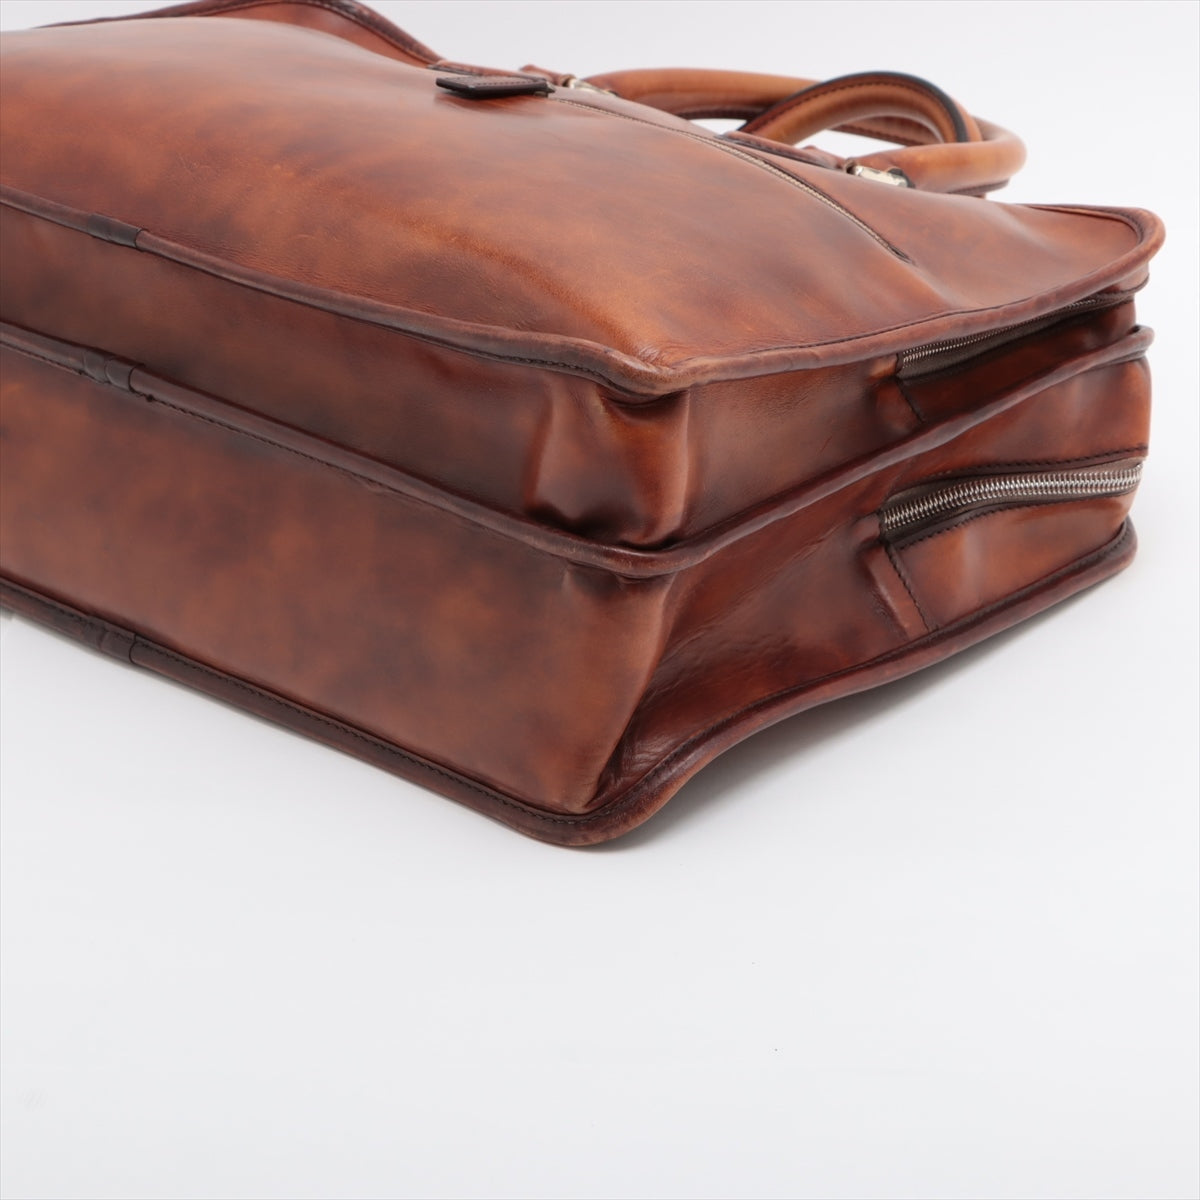 Berluti Troisnuits Leather Business bag Brown